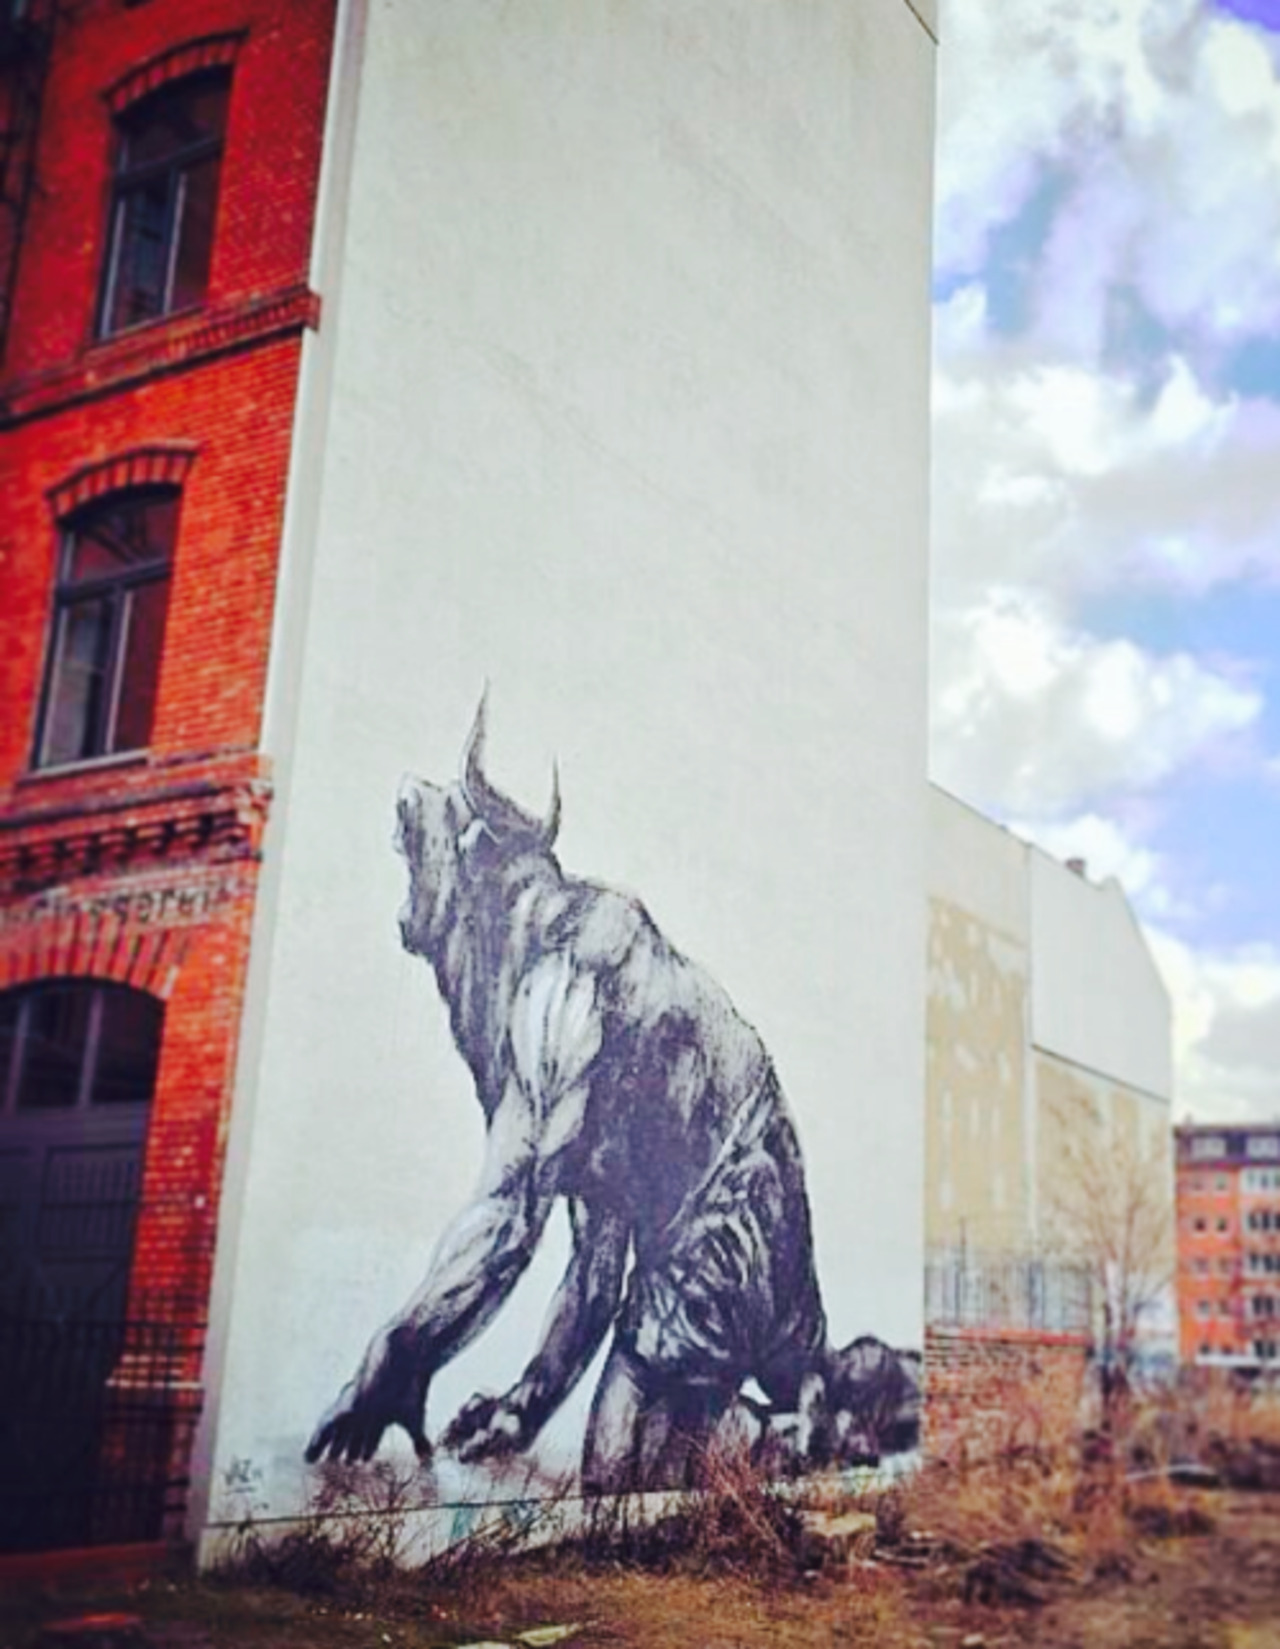 Photo - #Graffiti #Mural #Murales #StreetArt - #ZangArt #Showcase - http://bit.ly/1x5WMJw http://t.co/At7LP2UYVZ